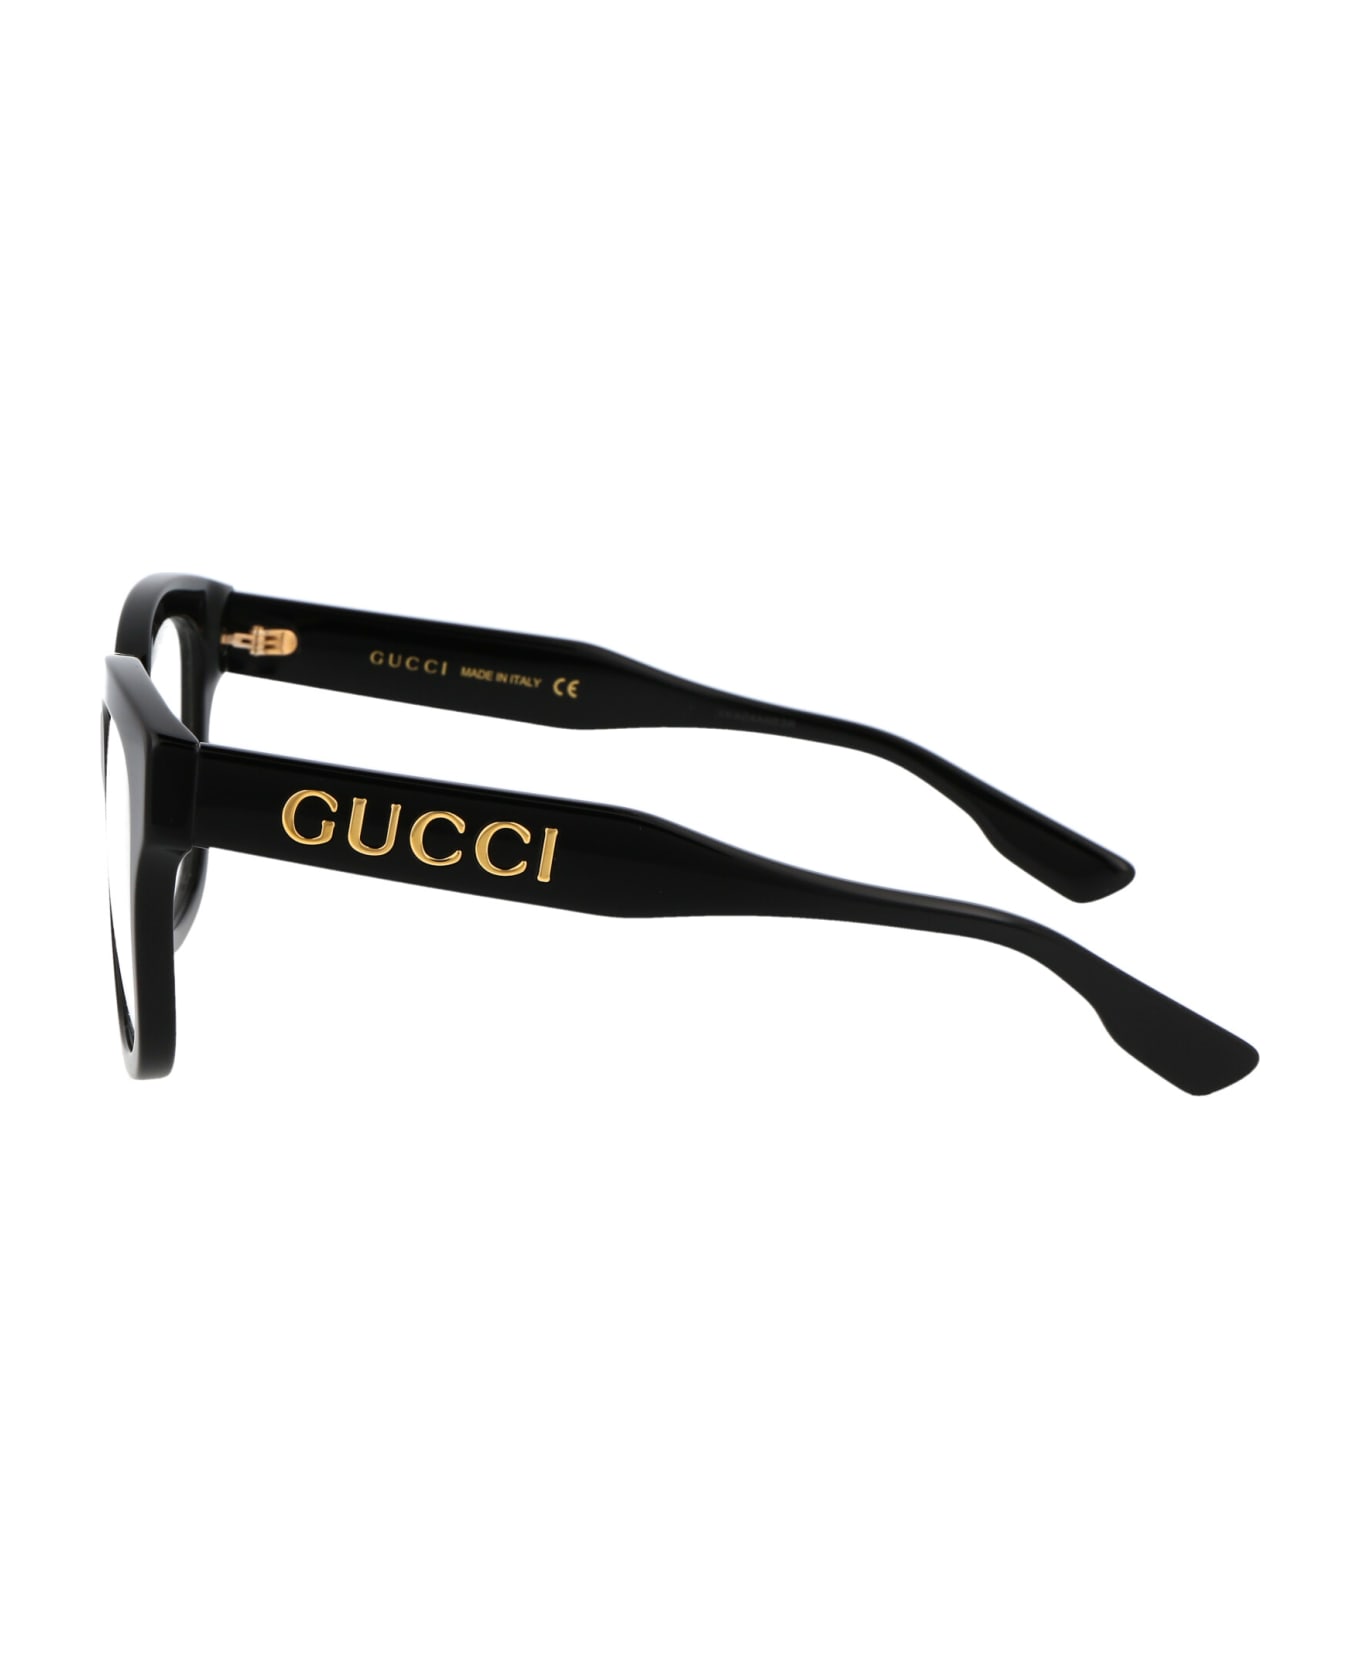 Gucci Eyewear Gg1155o Glasses - 001 BLACK BLACK TRANSPARENT アイウェア